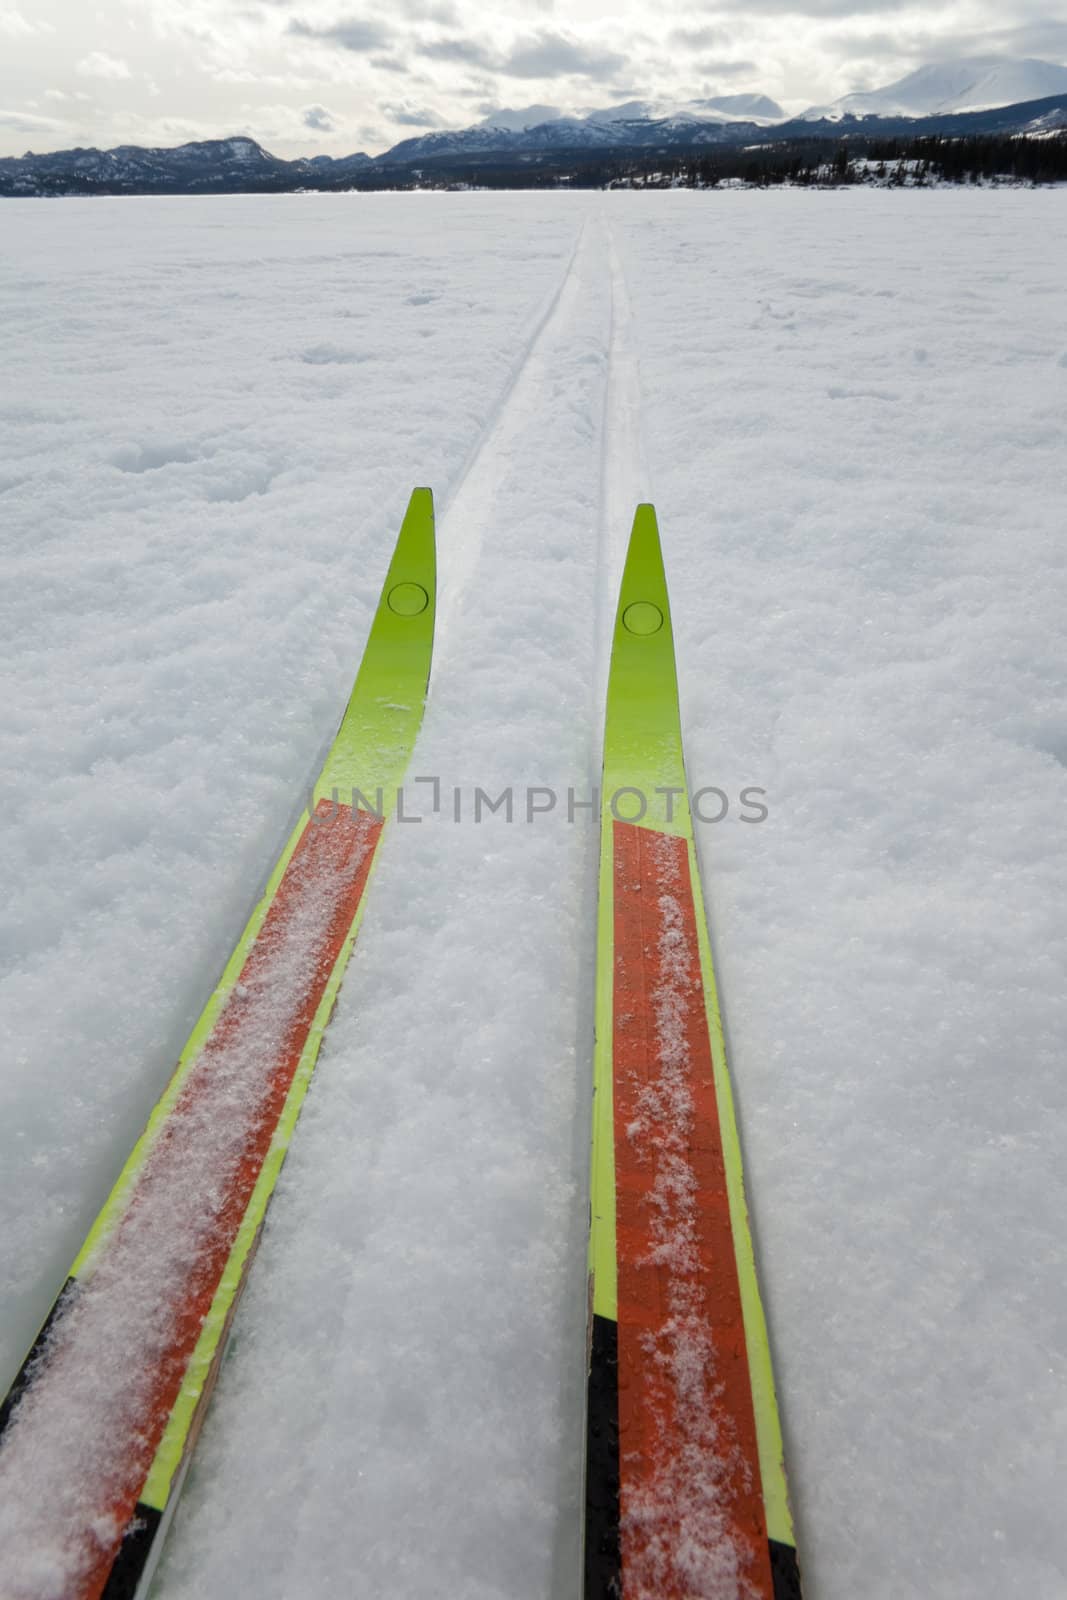 X-country ski winter sport by PiLens